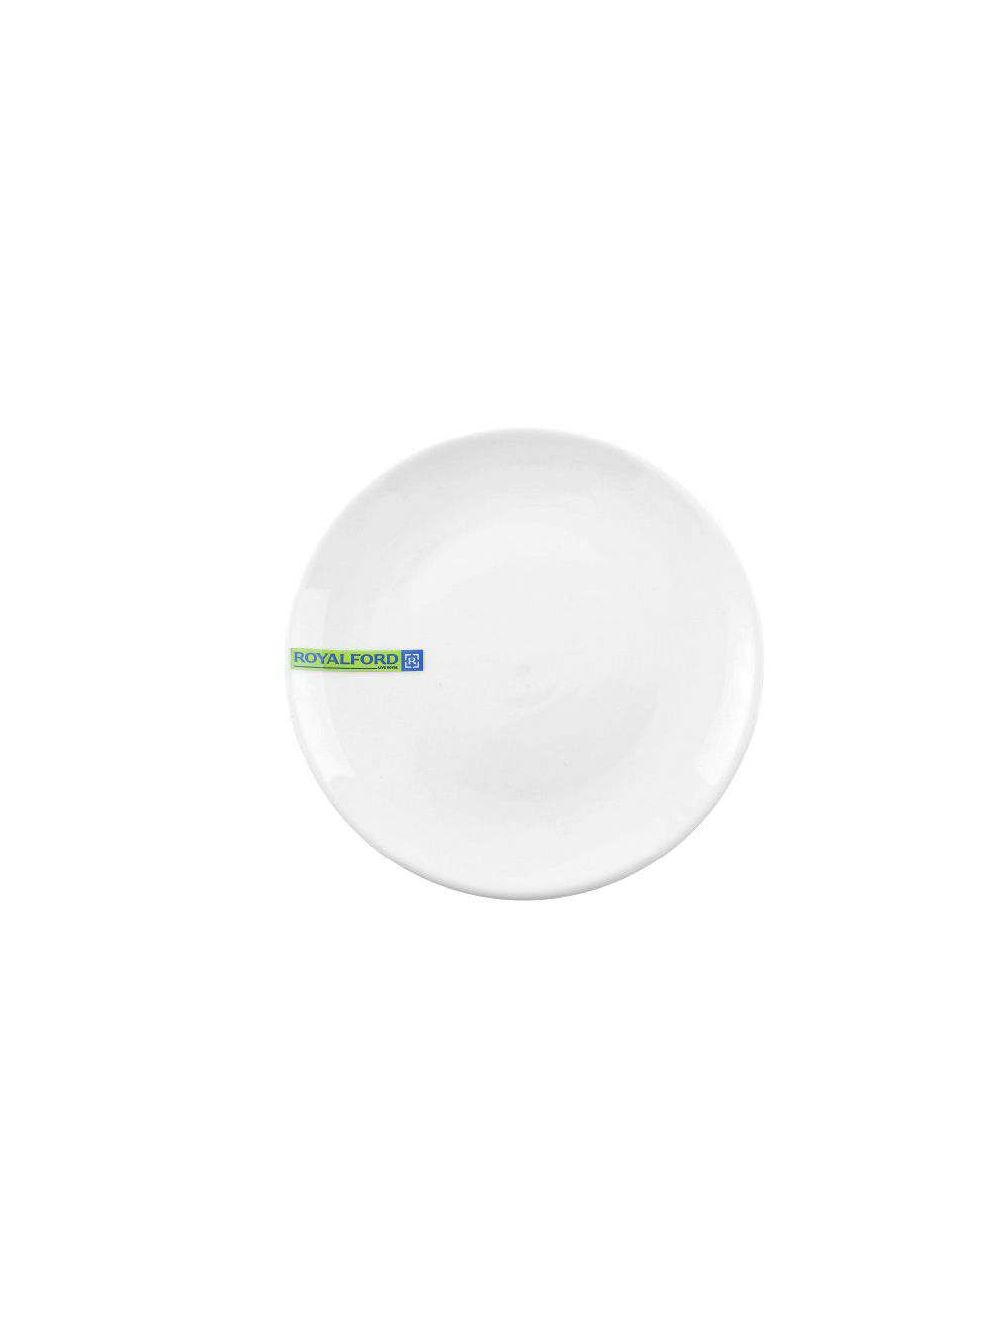 Royalford RF7990 Porcelain Magnesia Dinner Plate, 7 Inch